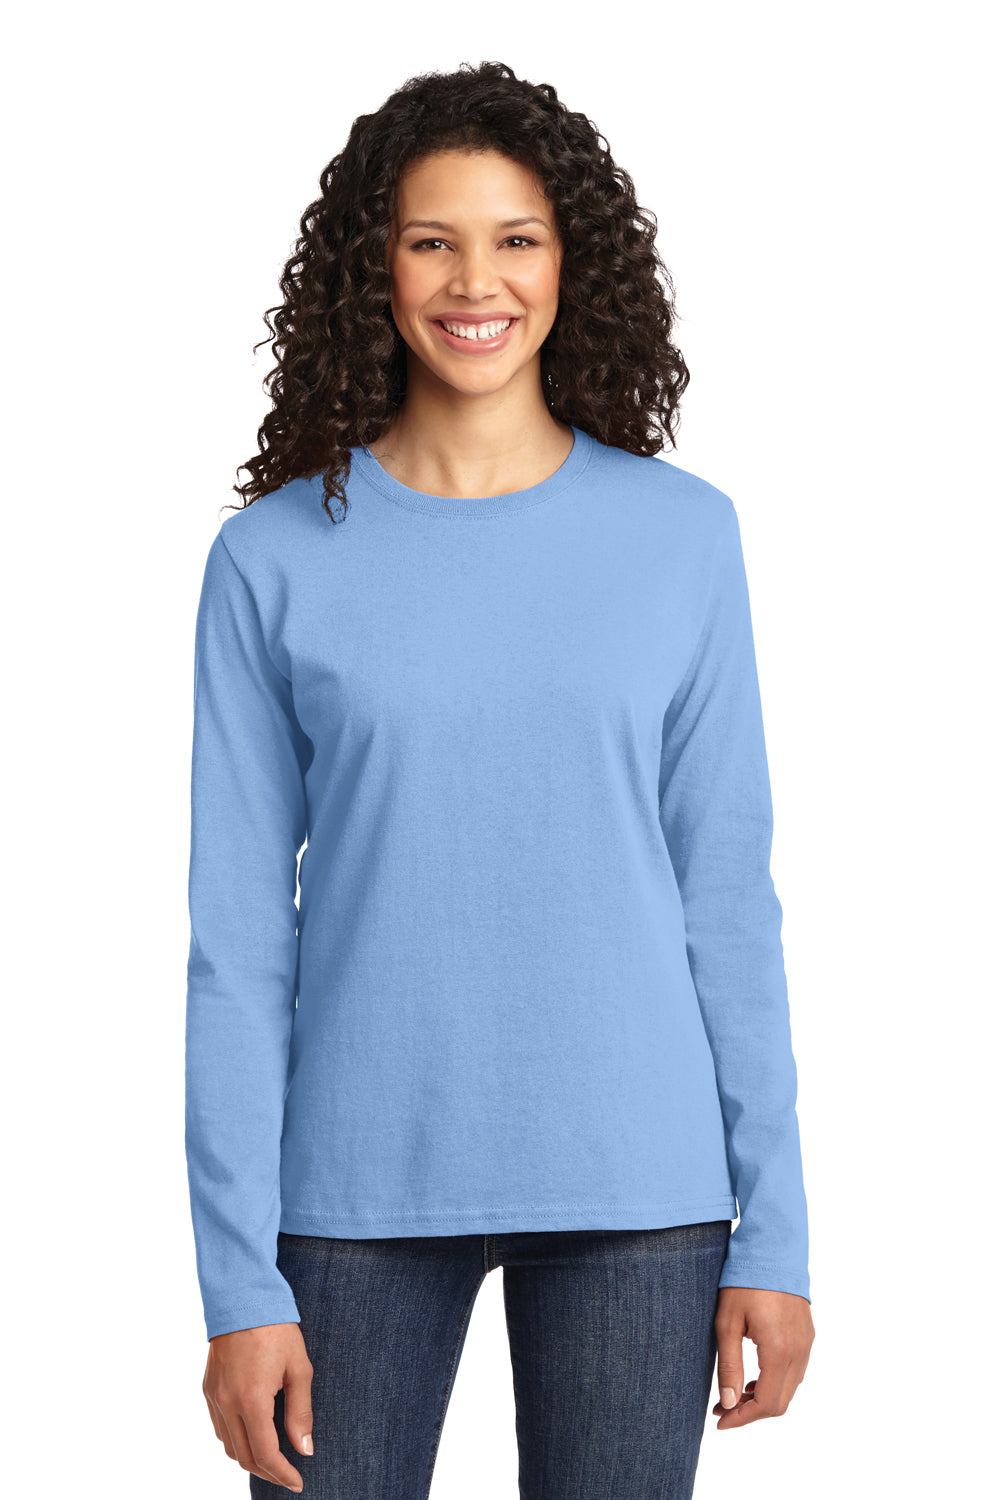 Port & Company LPC54LS Womens Core Long Sleeve Crewneck T-Shirt Light Blue Front